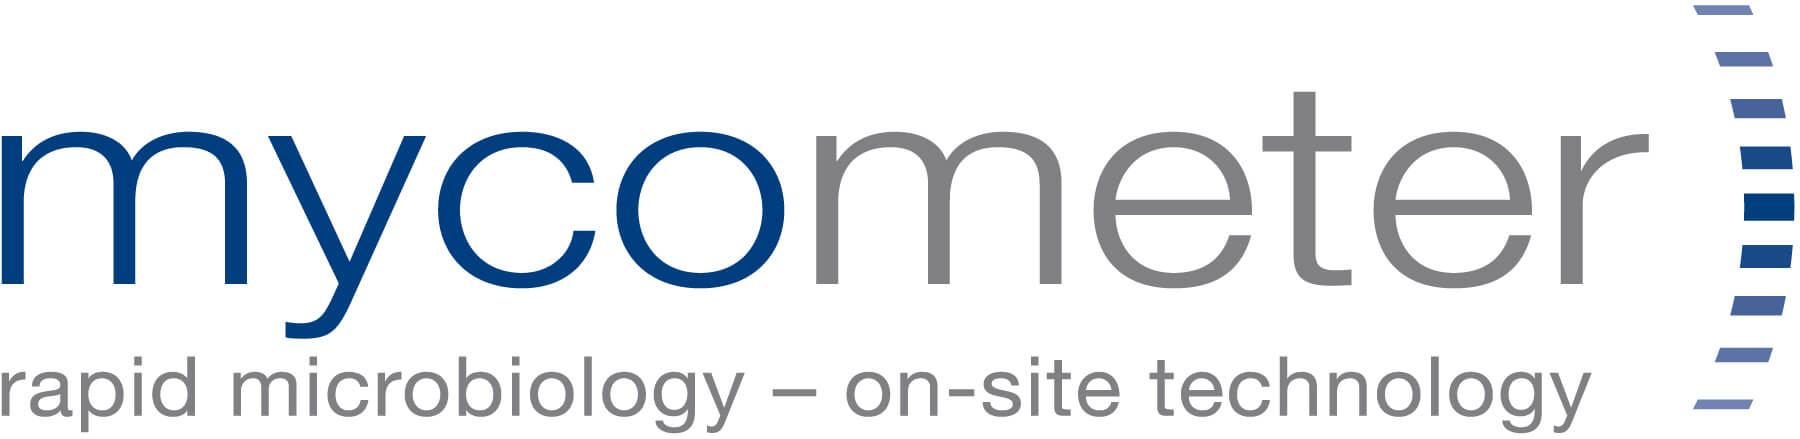 Mycometer logo